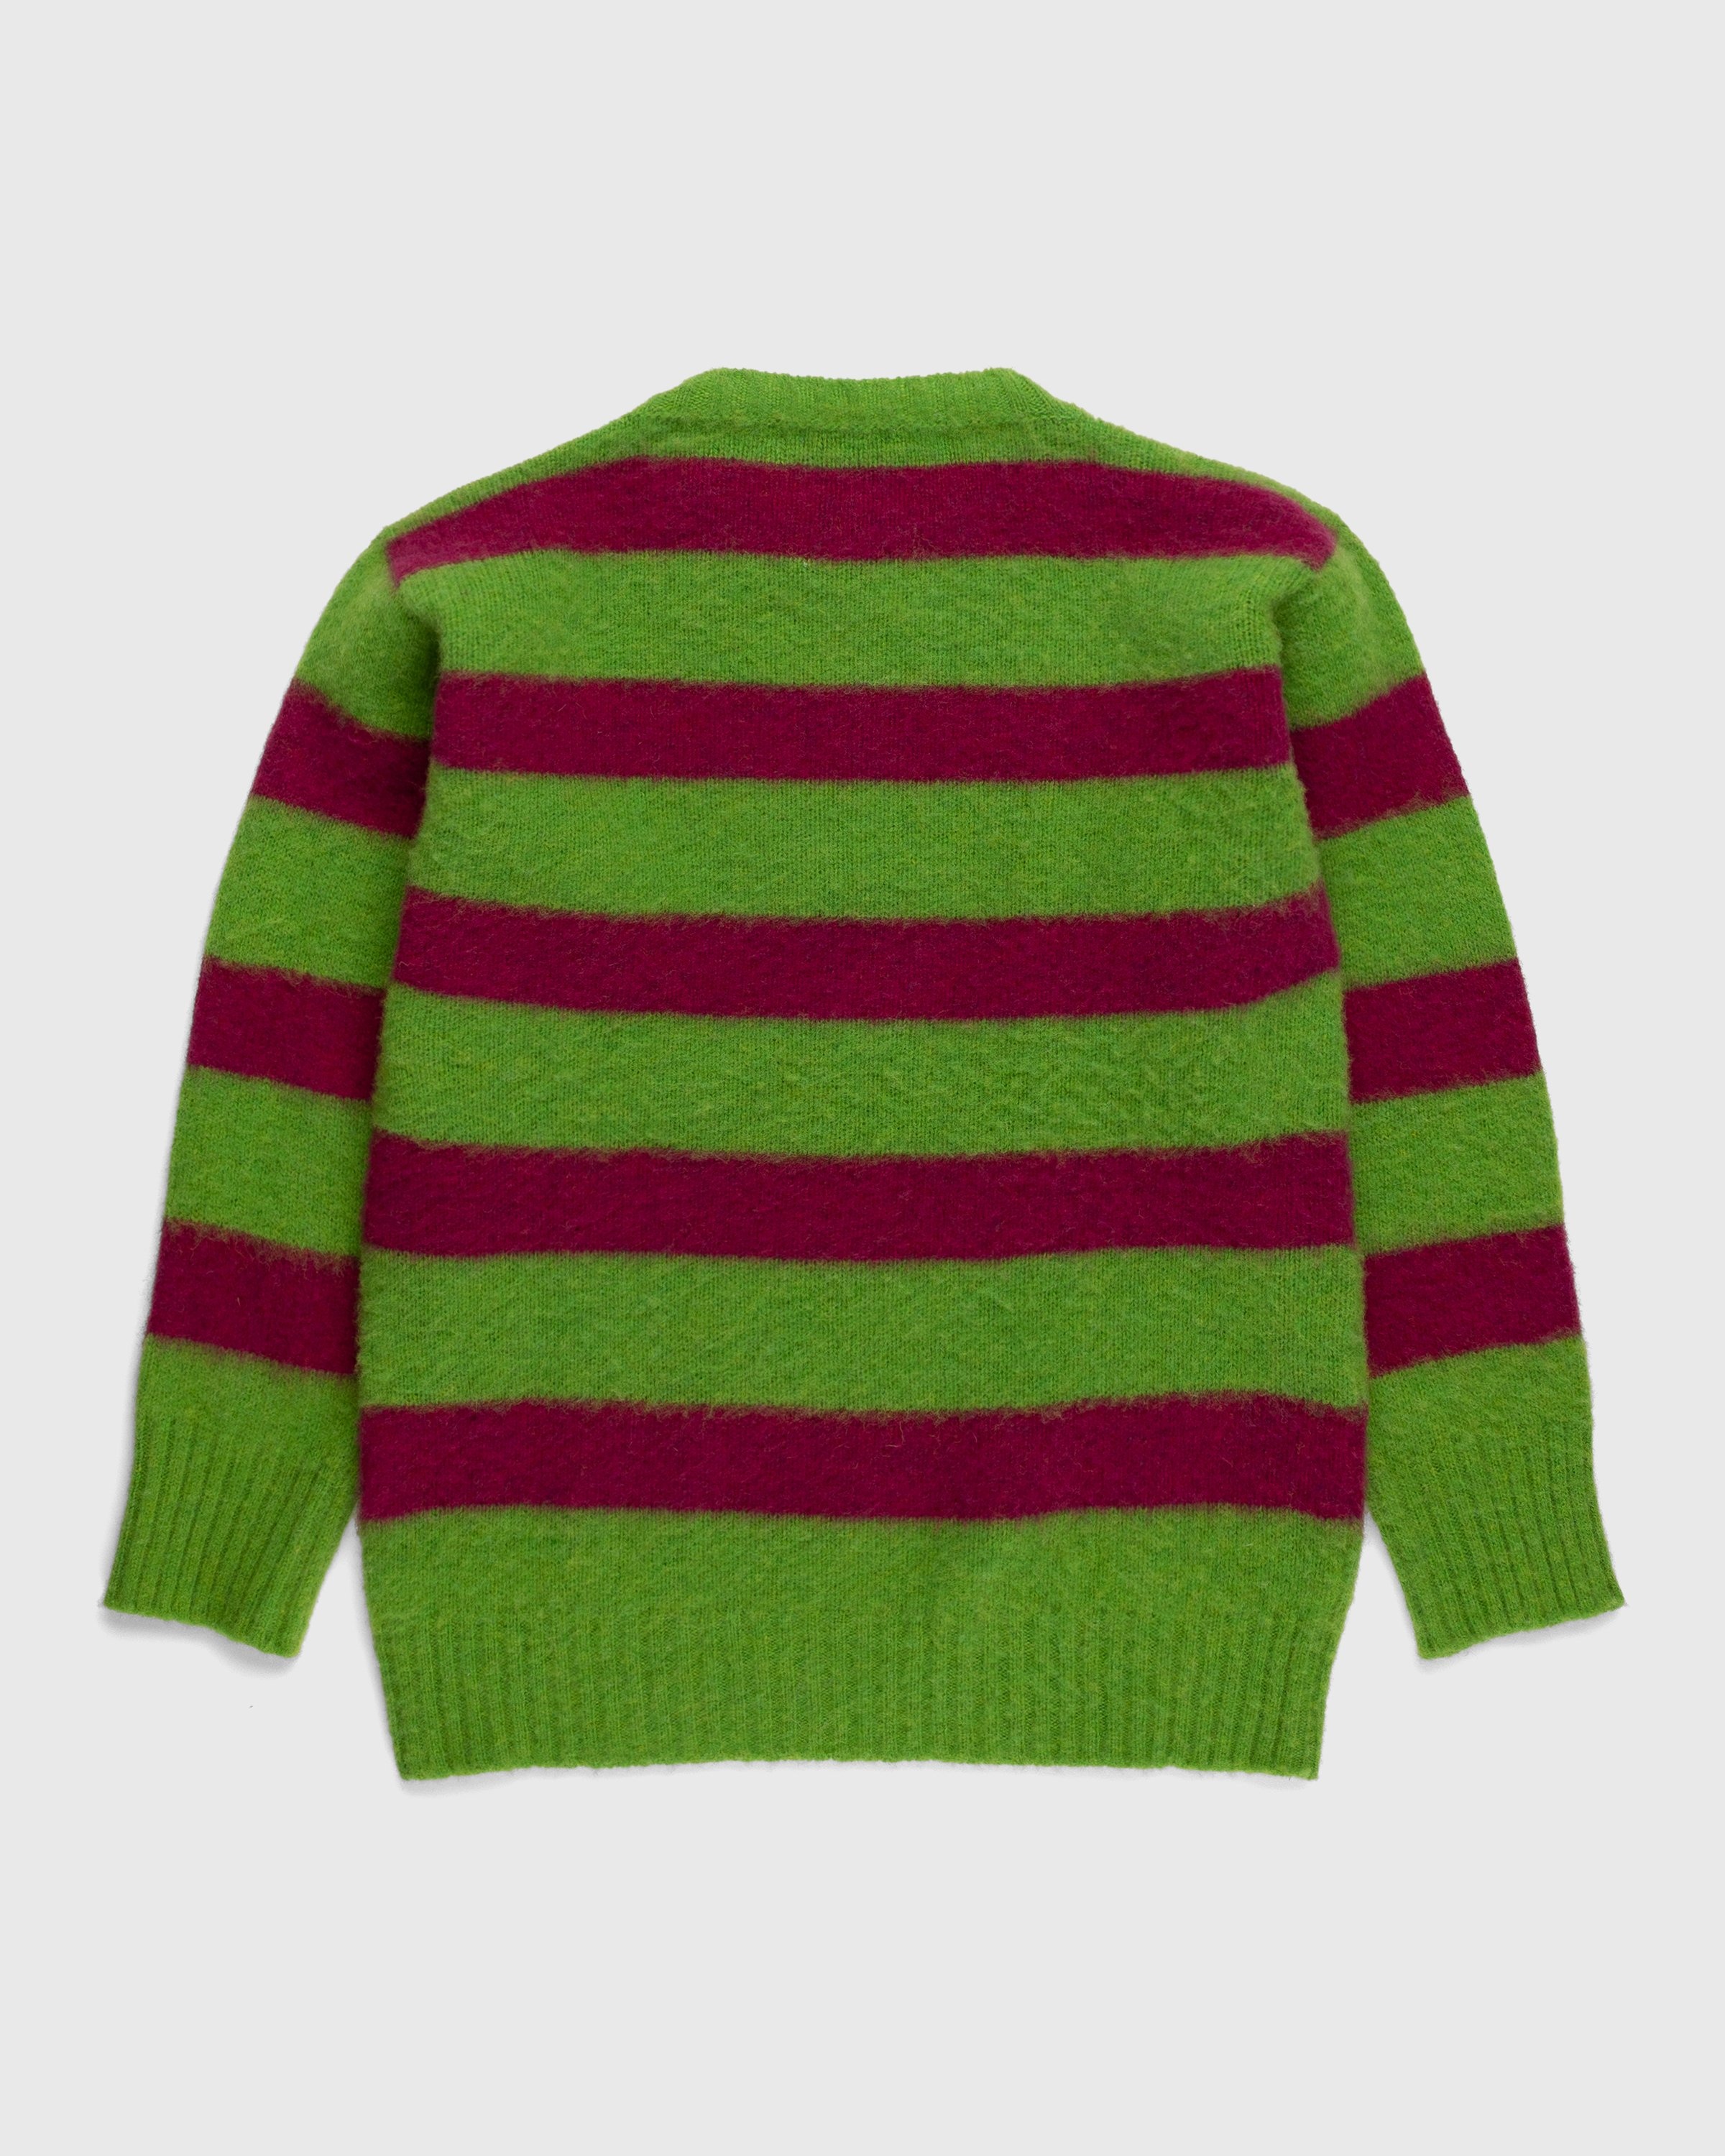 J. Press x Highsnobiety – Shaggy Dog Stripe Sweater Multi - Crewnecks - Multi - Image 2